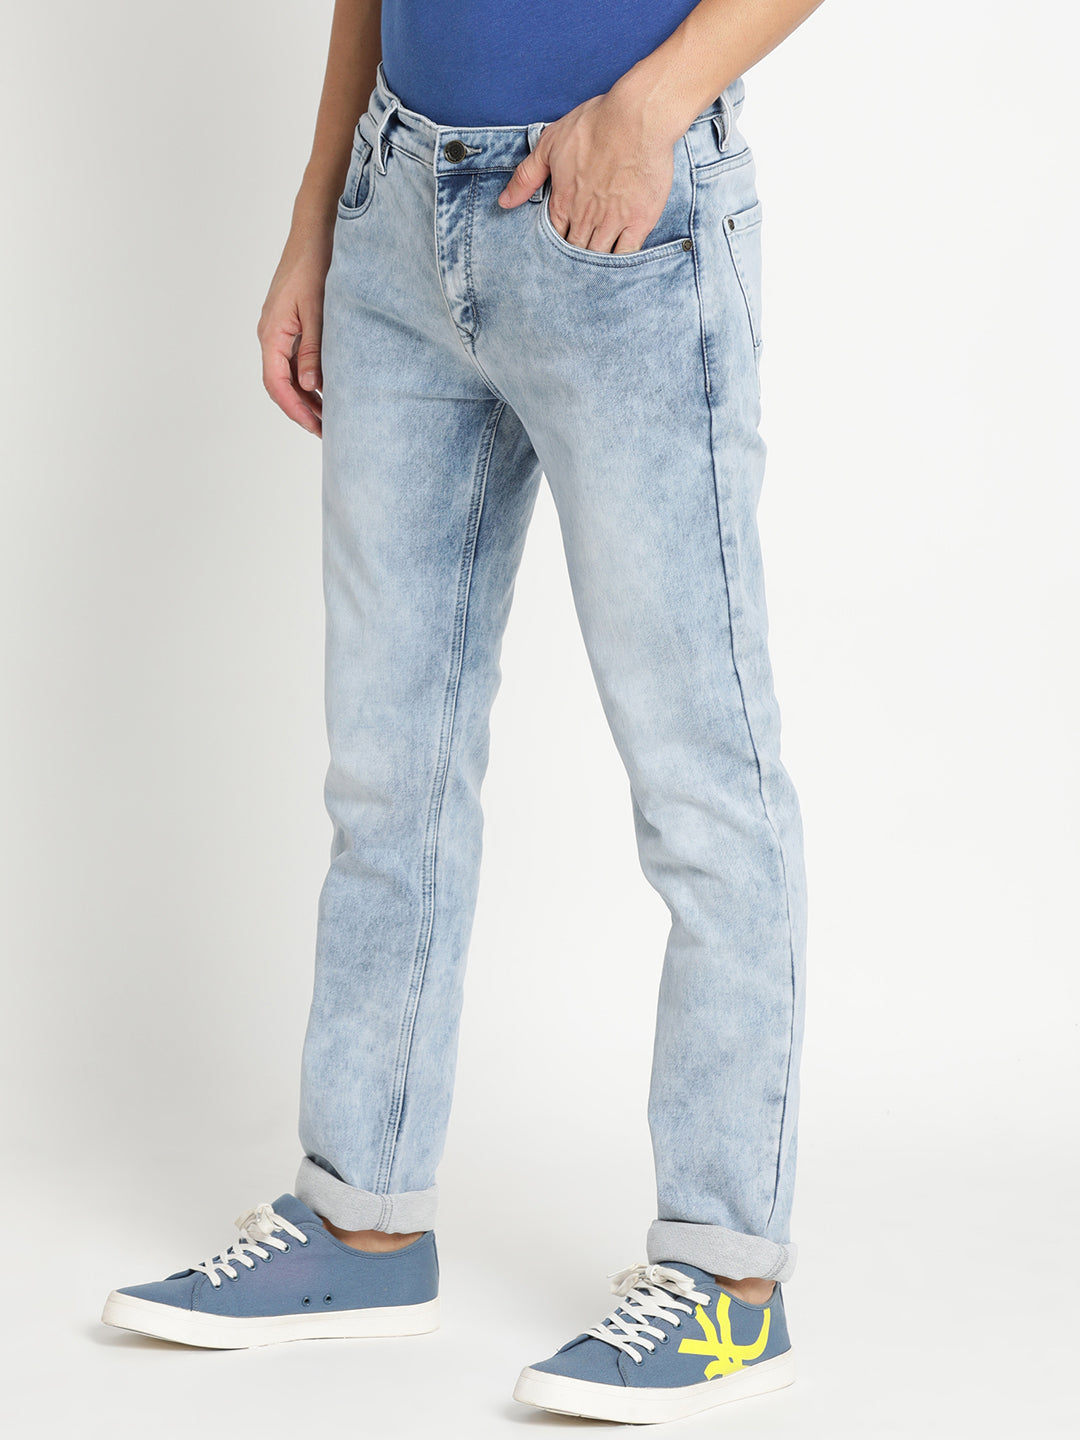 Cotton Stretch Light Blue Plain Narrow Fit Flat Front Casual Jeans